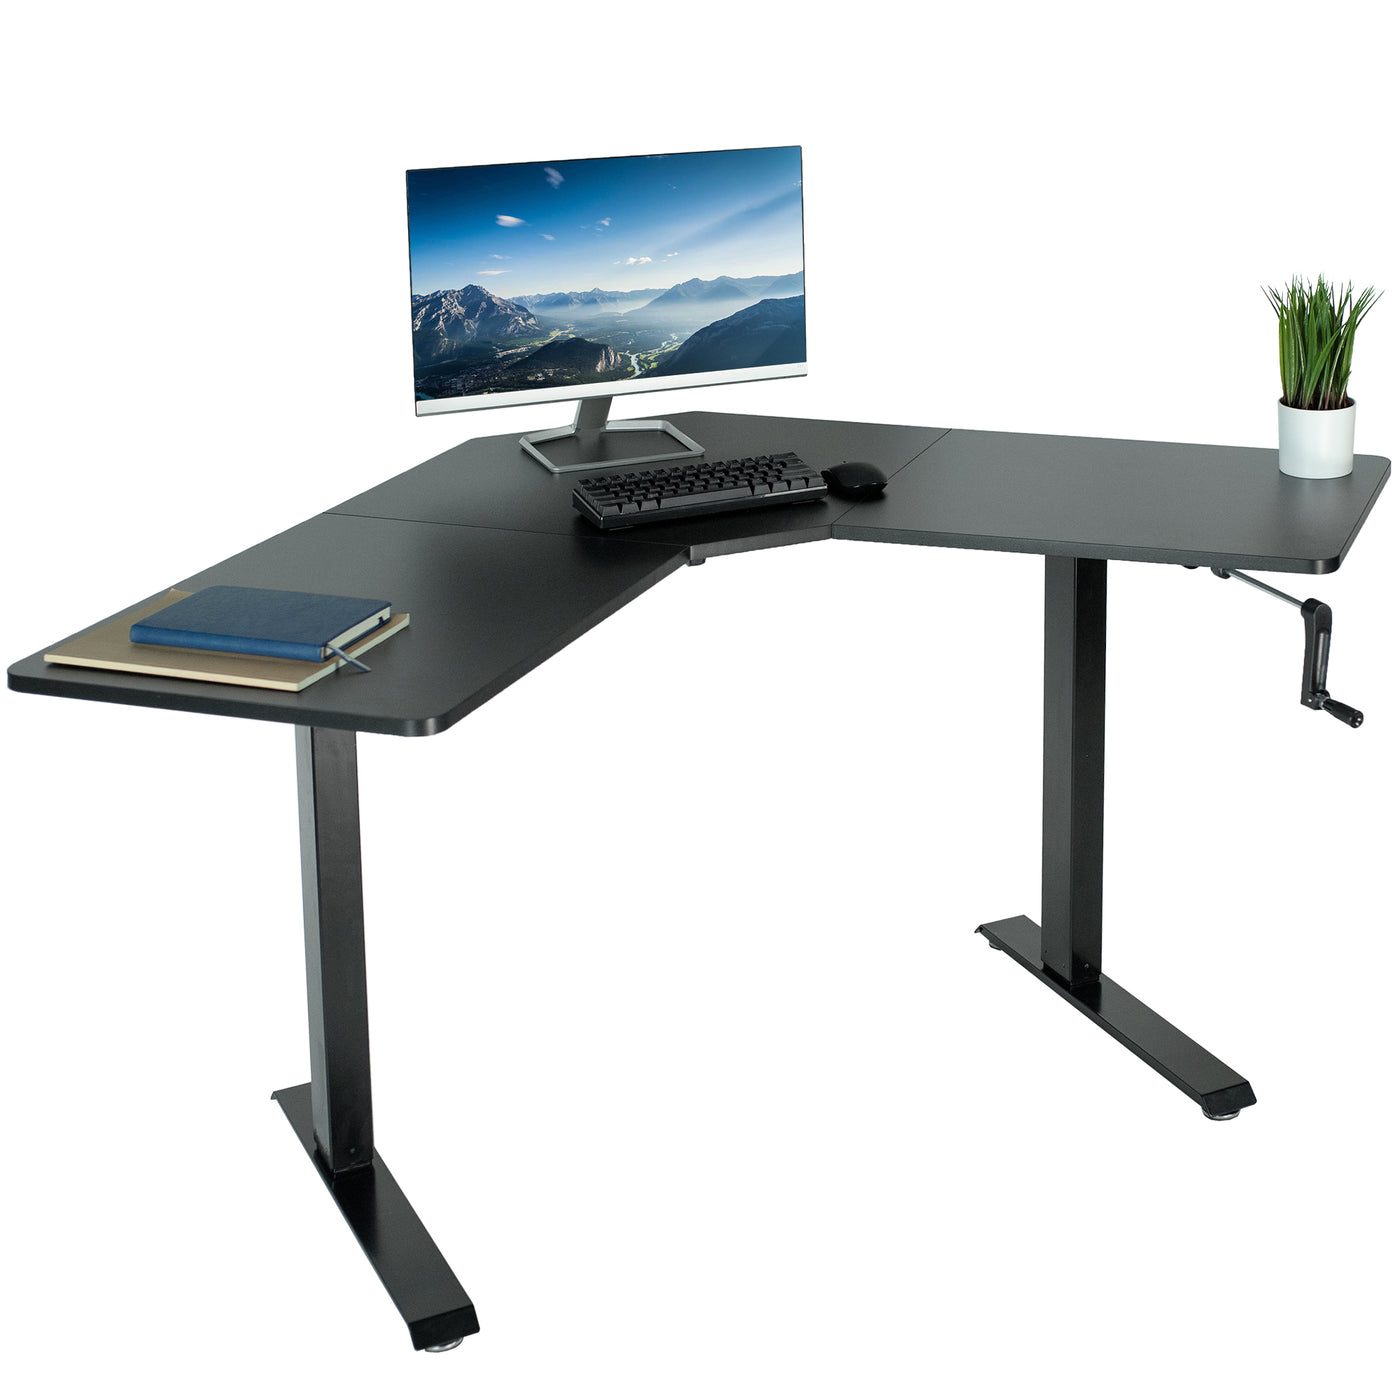 Heavy-duty manual hand crank adjustable height corner desk workstation for active sit or stand efficient workspace.